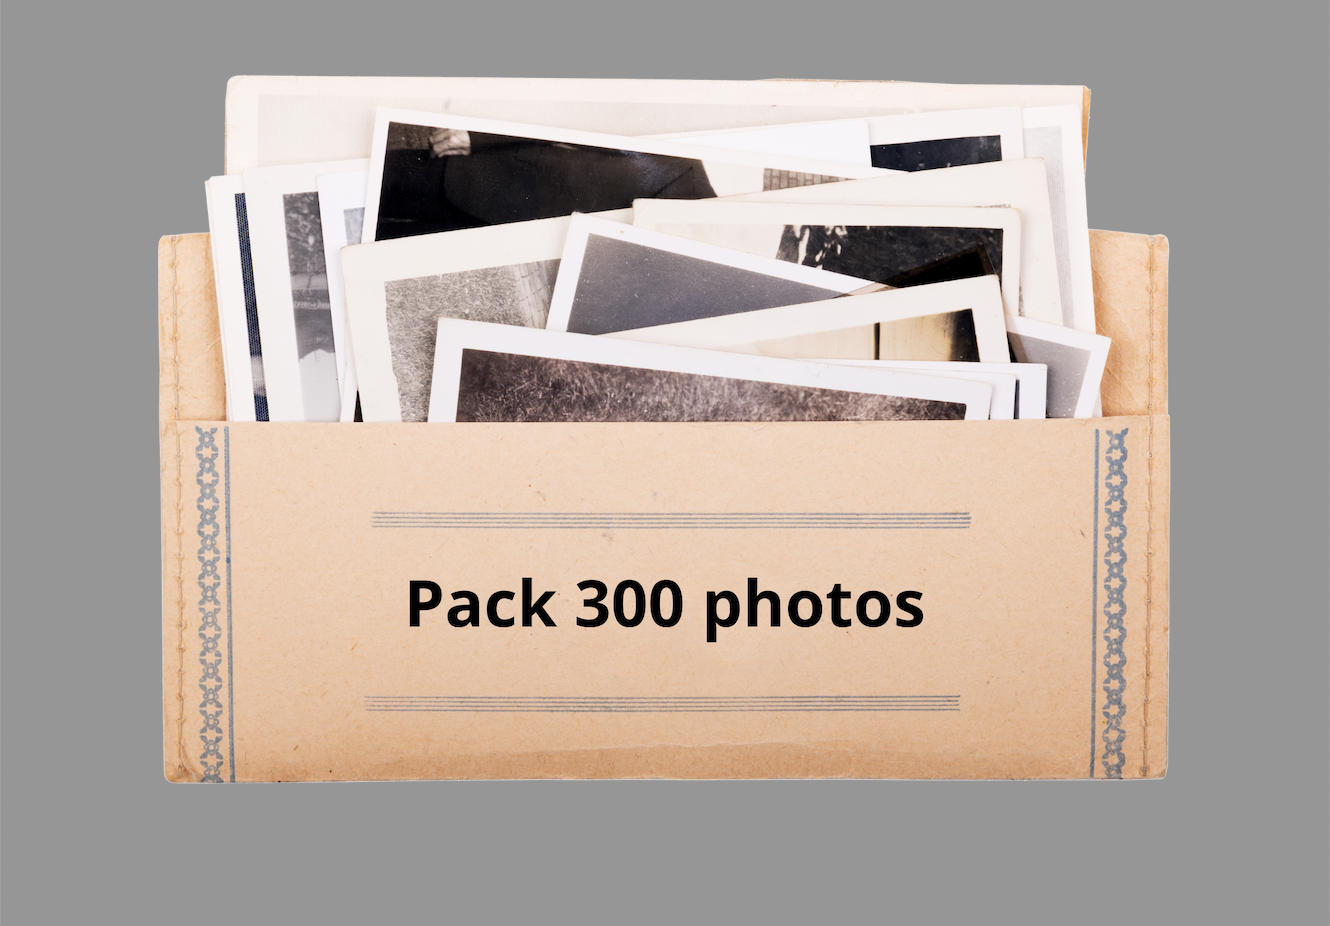 Pack 300 photos